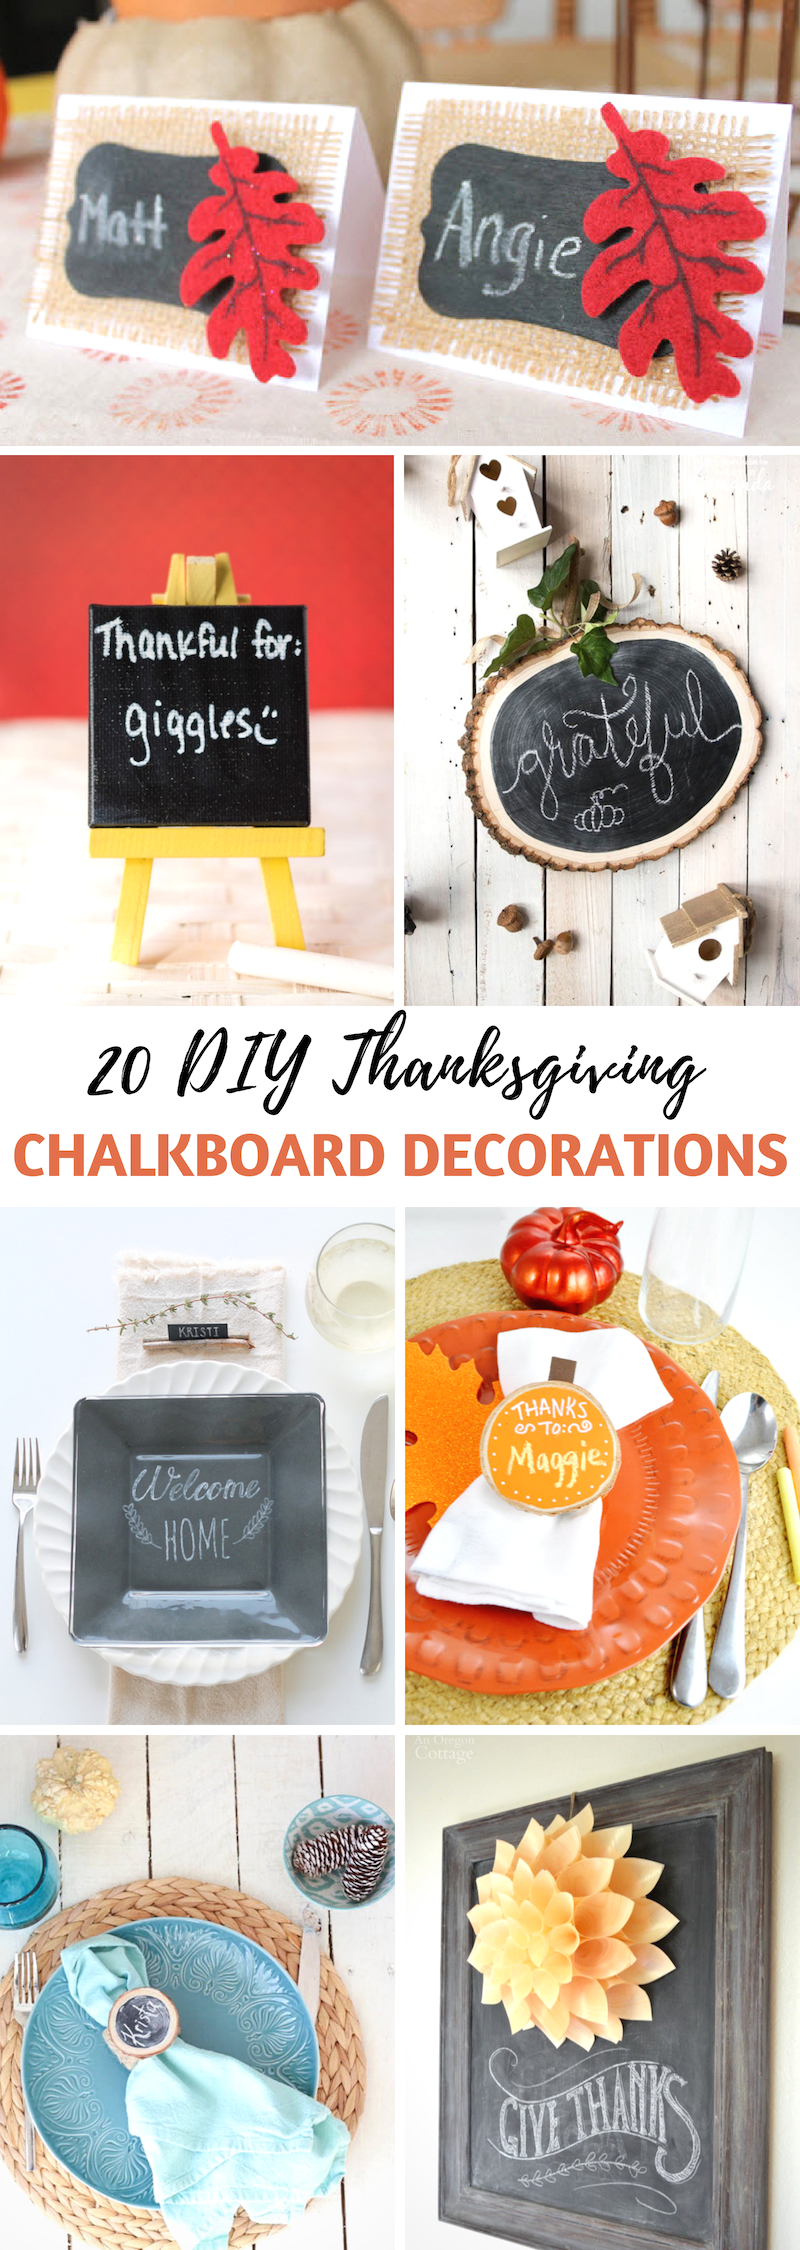 DIY Thanksgiving Chalkboard Decorations